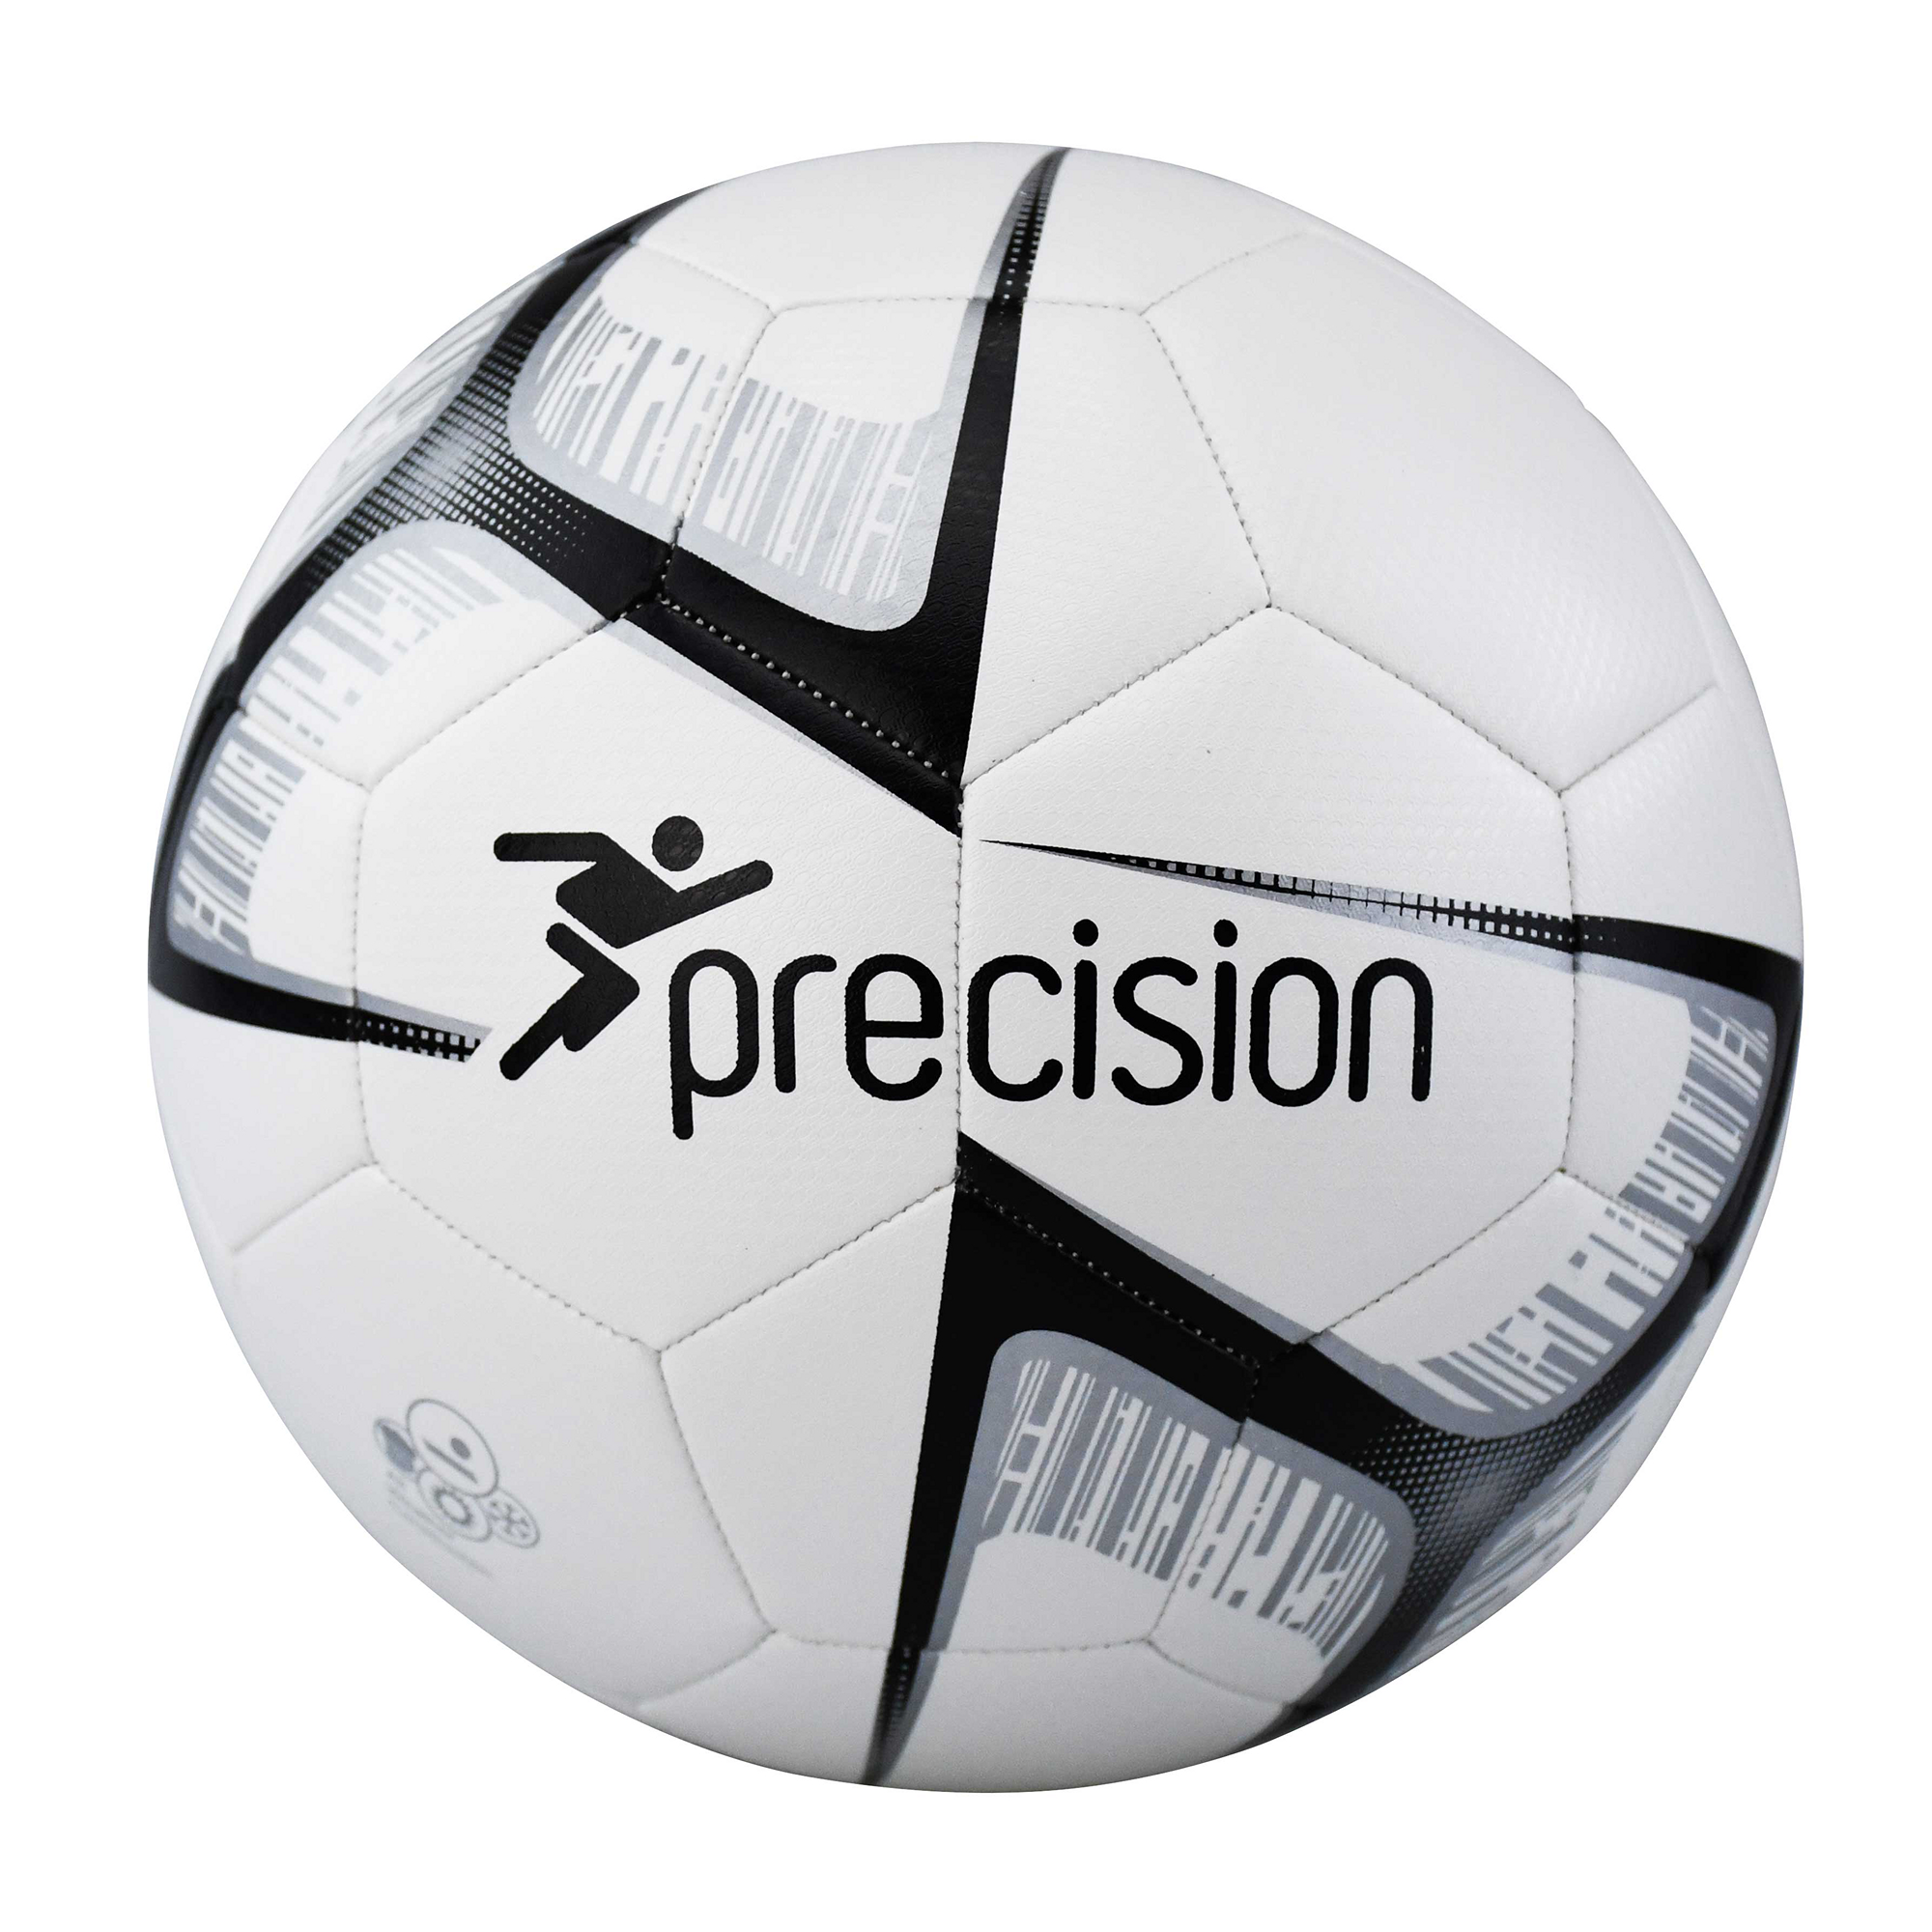 Precision Size 5 Santos 370g Training Football White-Black 